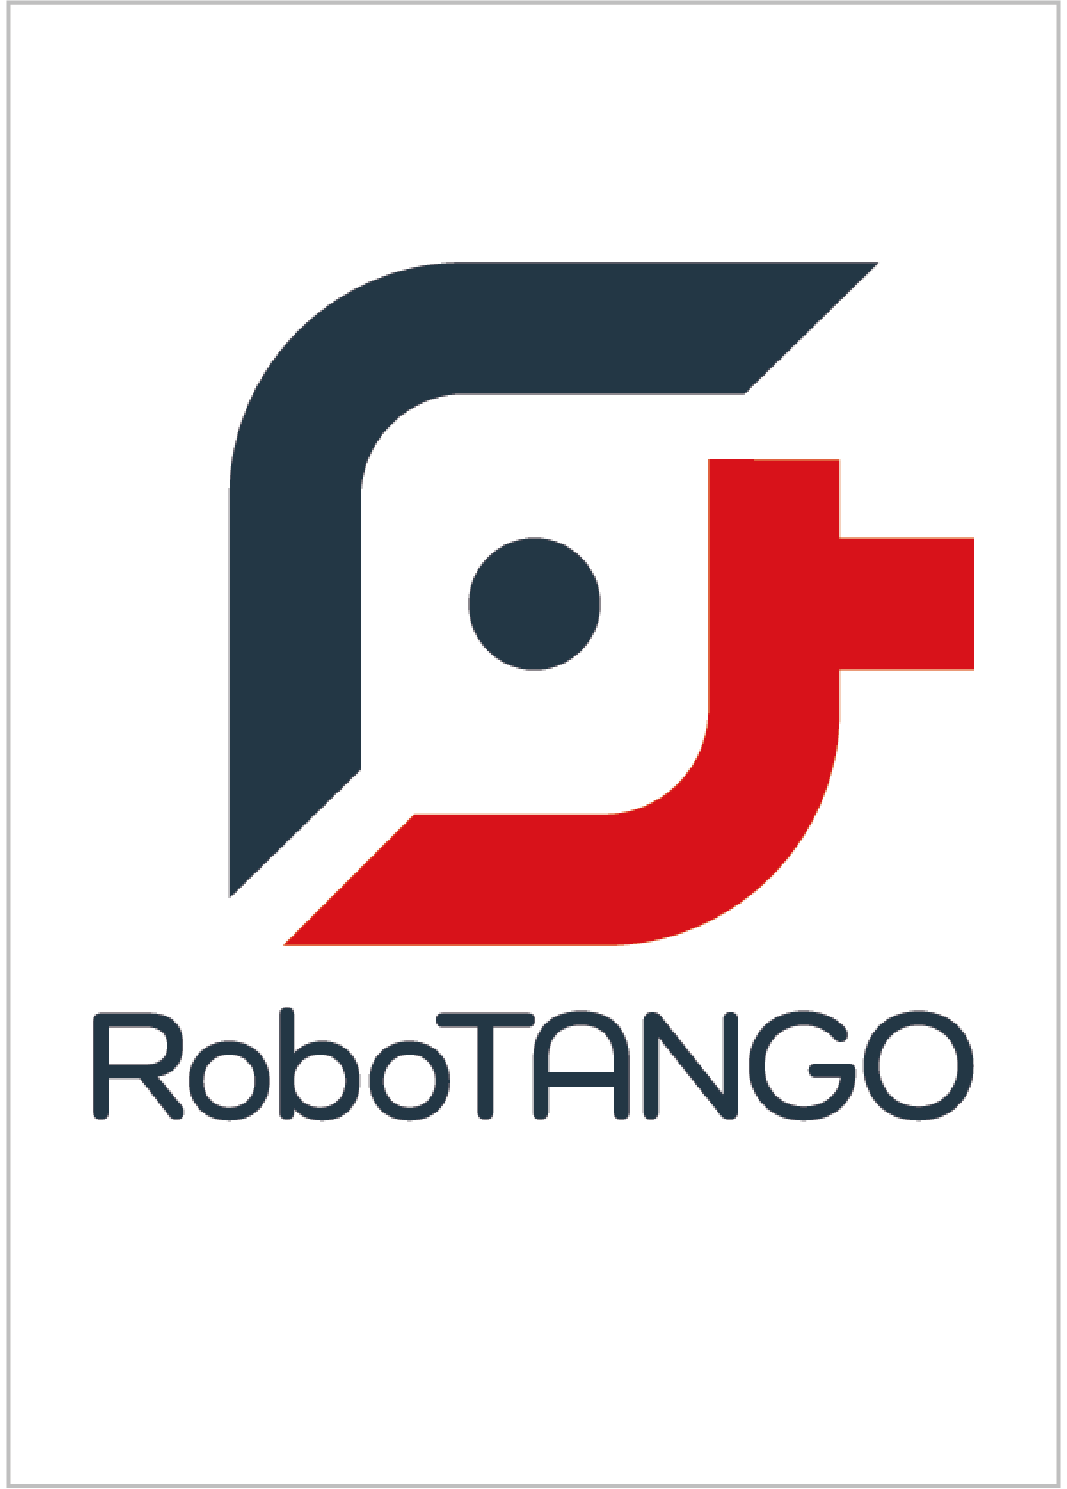 RoboTANGOロゴ